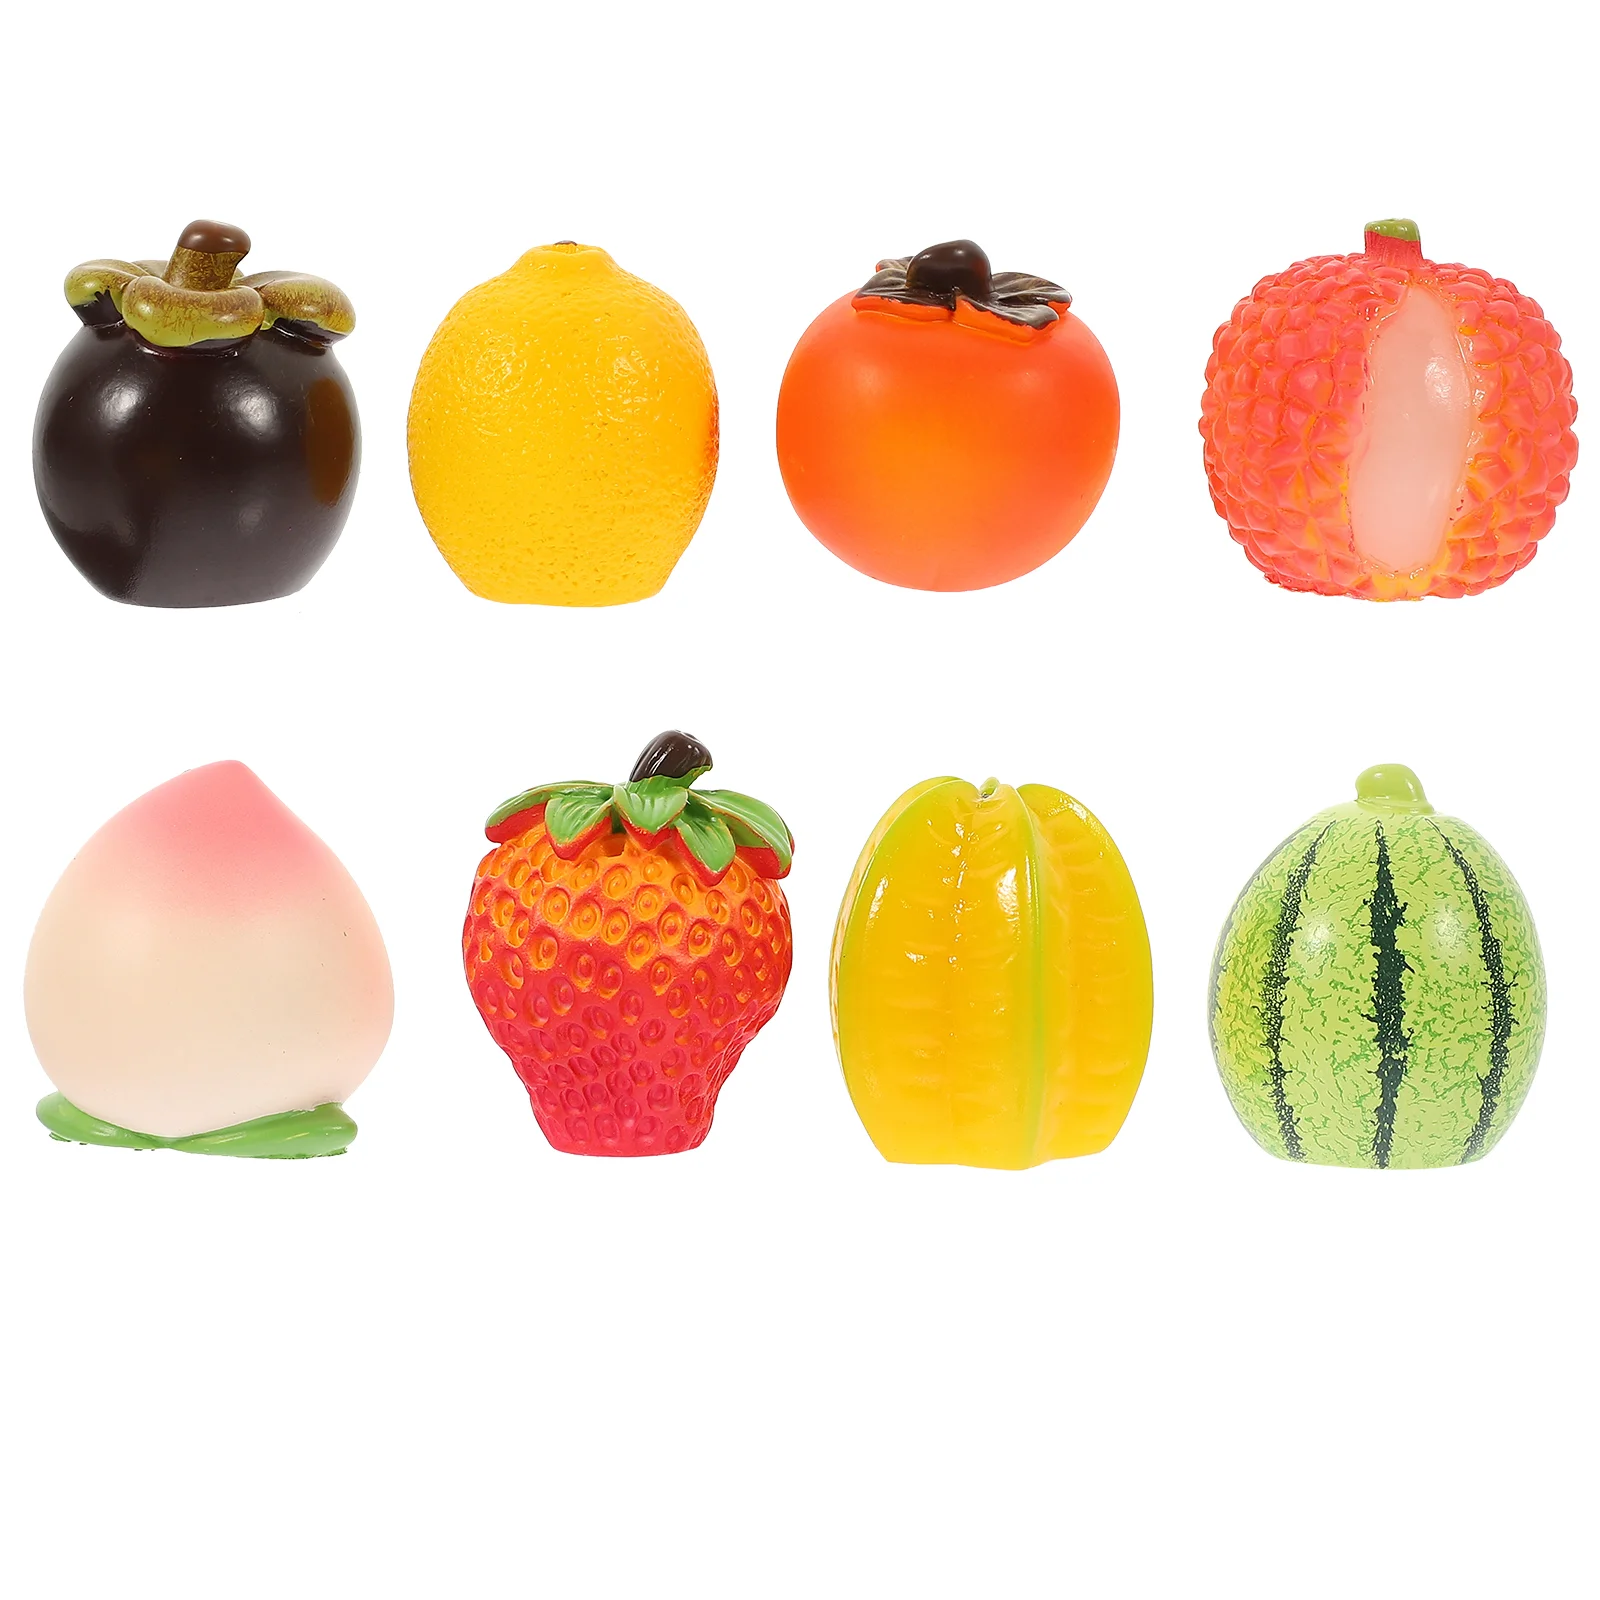 

8pcs Simulation Mini Fruits Model Lifelike Miniature Fruits Prop Decorative Mini Fruits Model